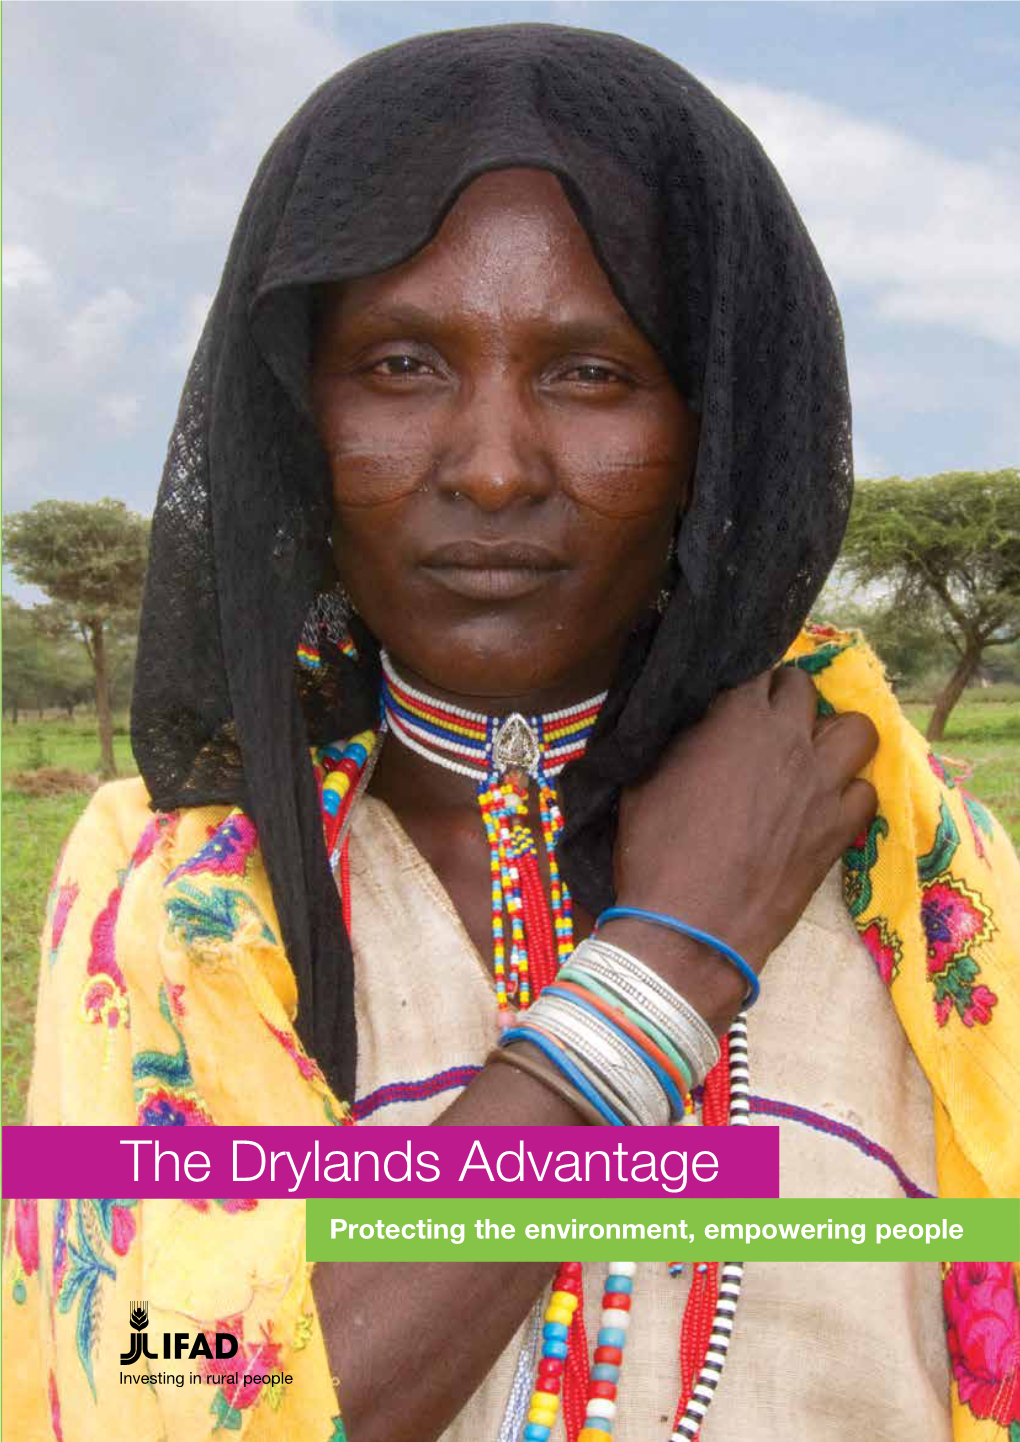 The Drylands Advantage